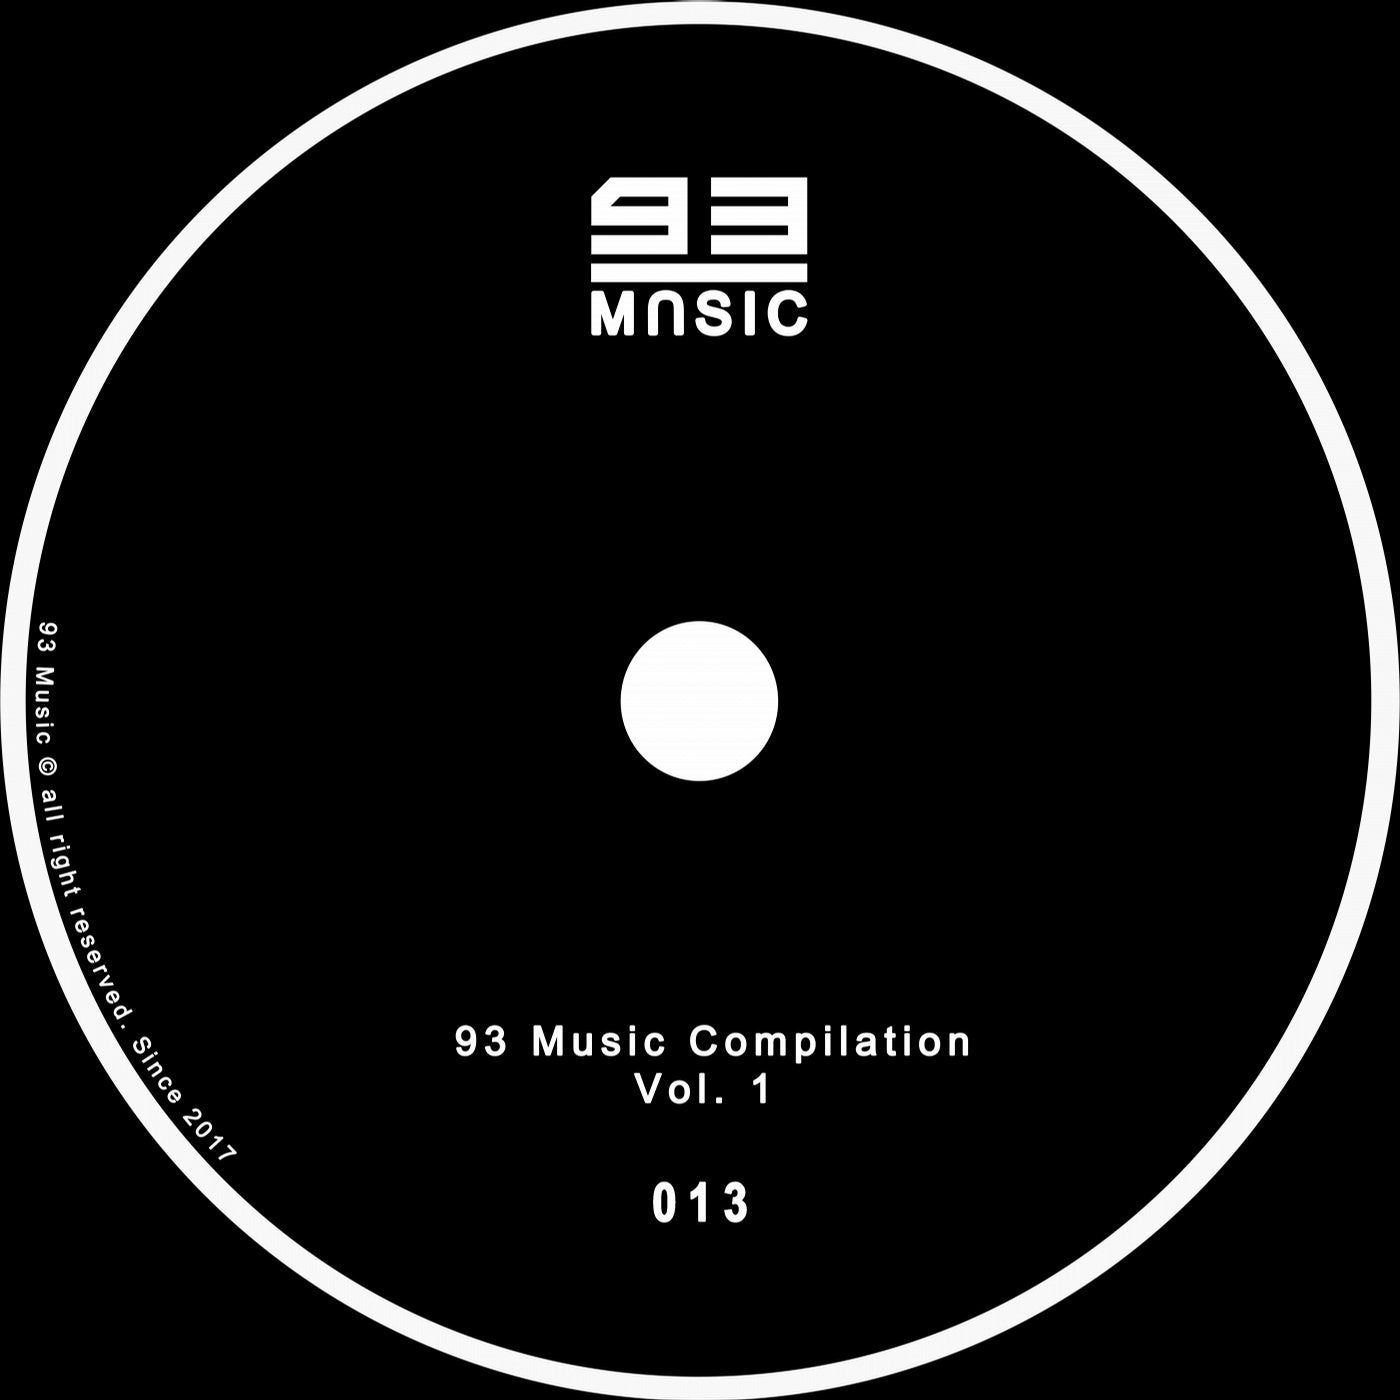 93 Music Compilation Vol. 1